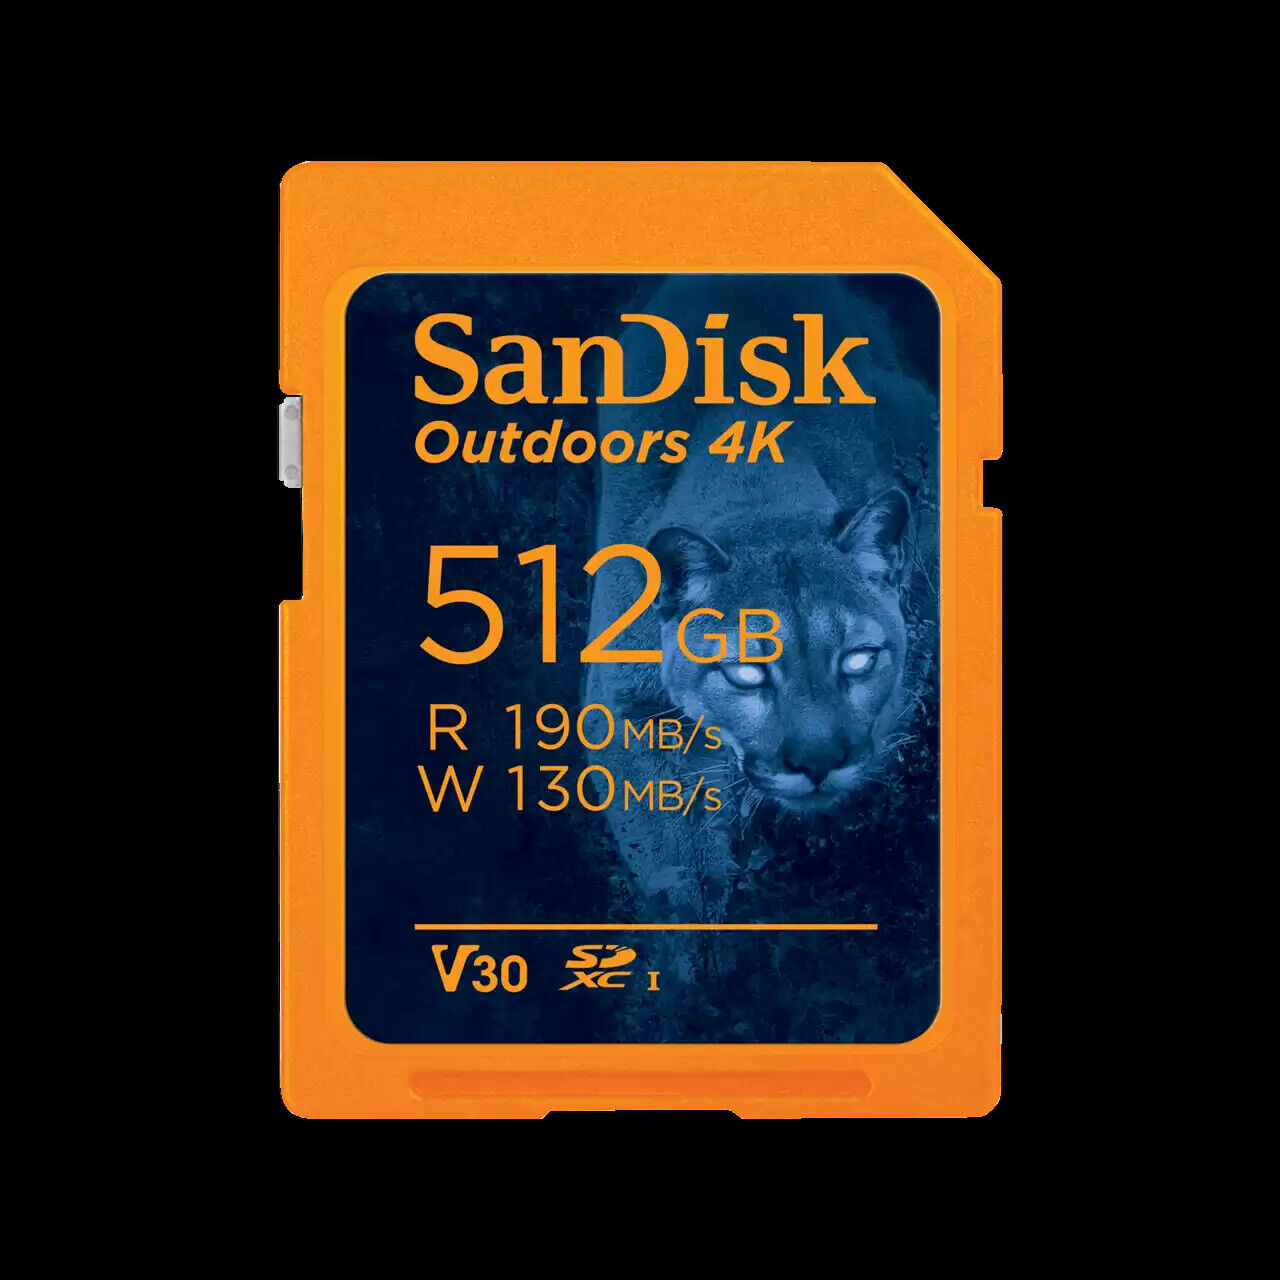 SanDisk 512GB Outdoors 4K SD UHS-I SDXC Memory Card - SDSDXWV-512G-GN6VN